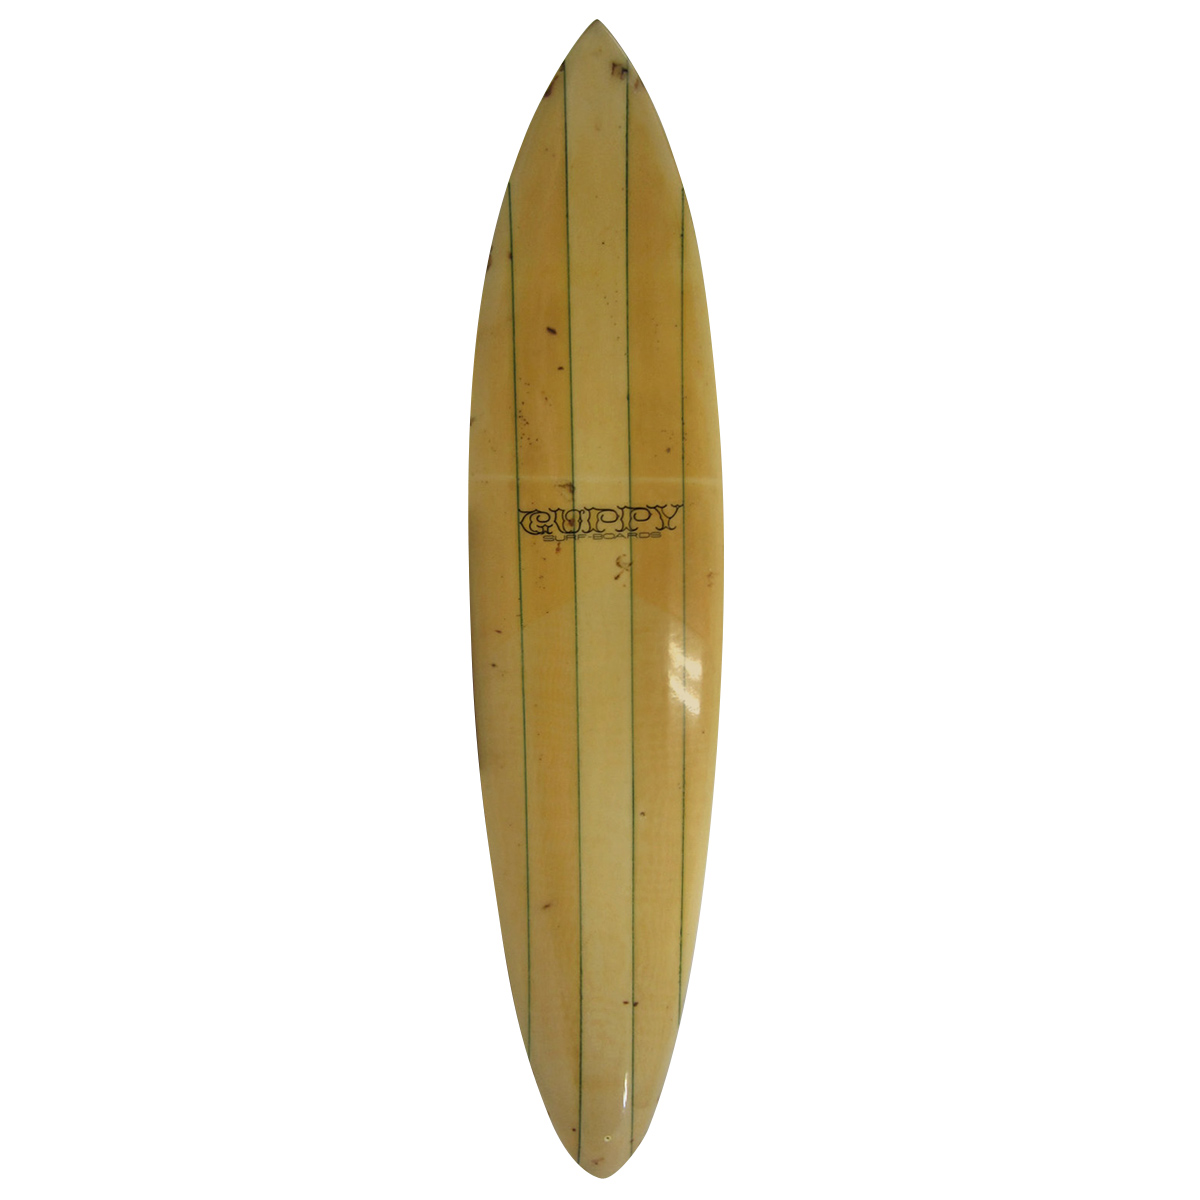  / GUPPY SURFBOARDS / 7'4 Mini Log